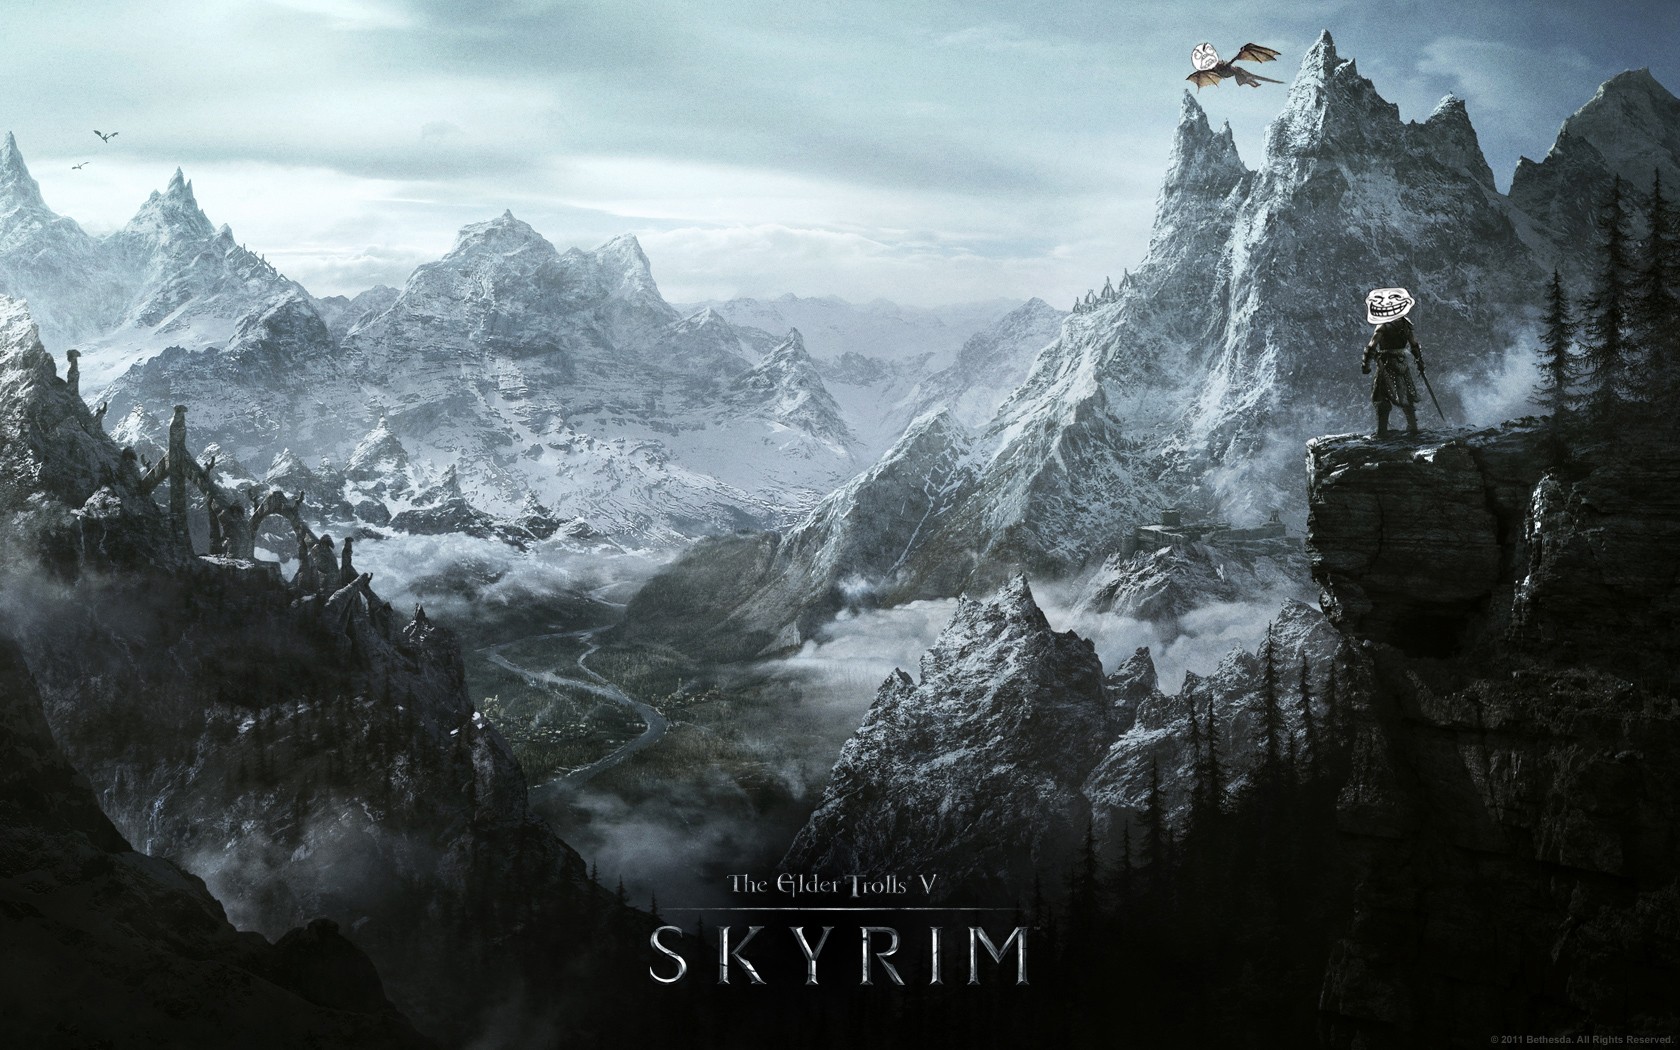 General 1680x1050 video games The Elder Scrolls V: Skyrim PC gaming fantasy art video game art Bethesda Softworks 2011 (Year) mountains